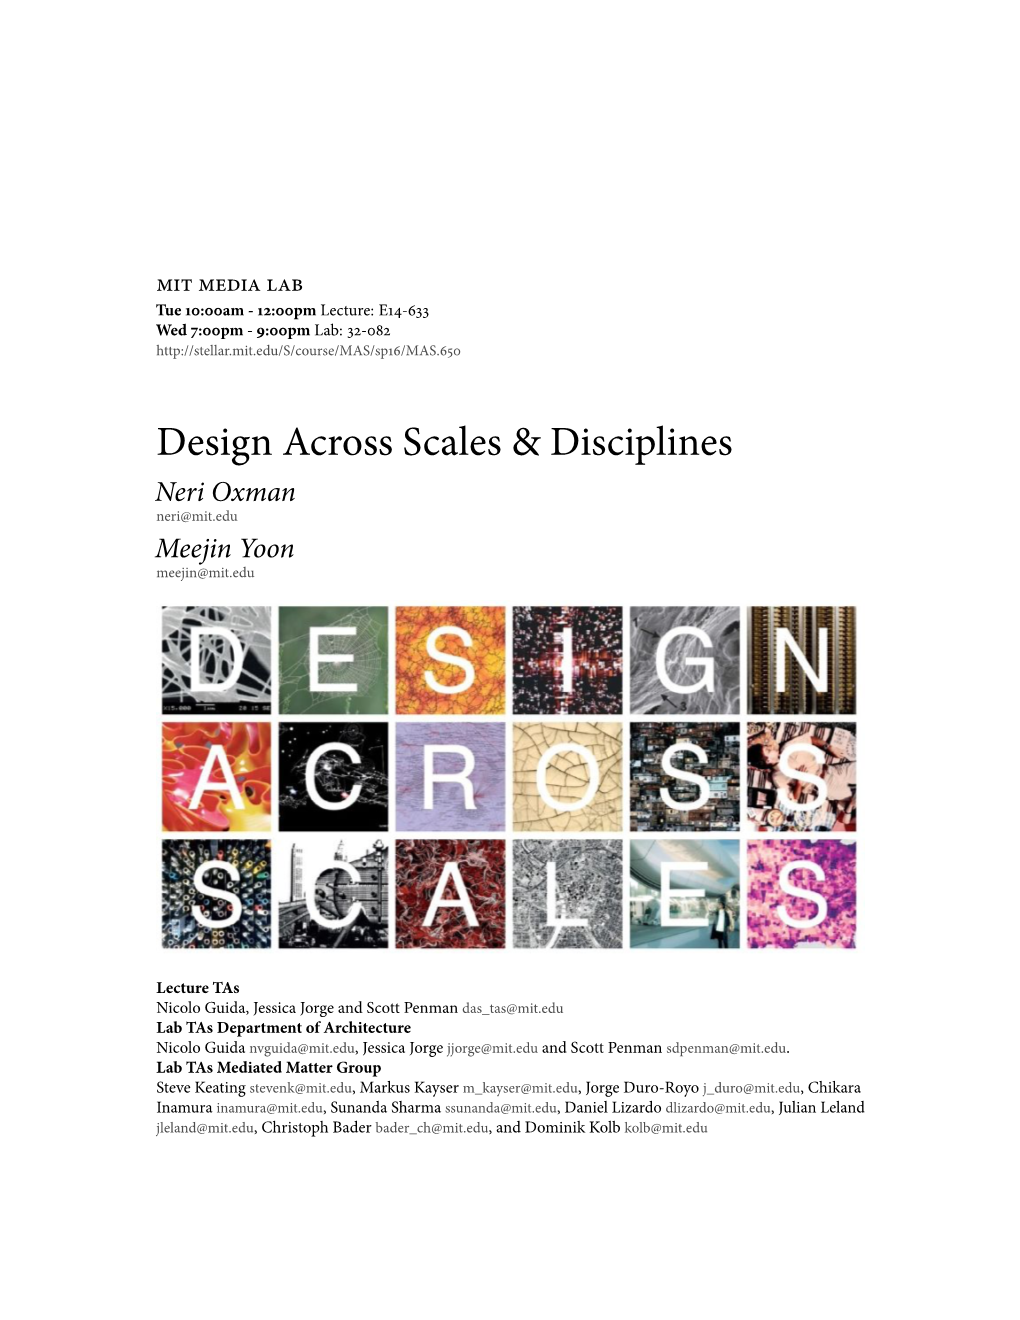 Design Across Scales & Disciplines